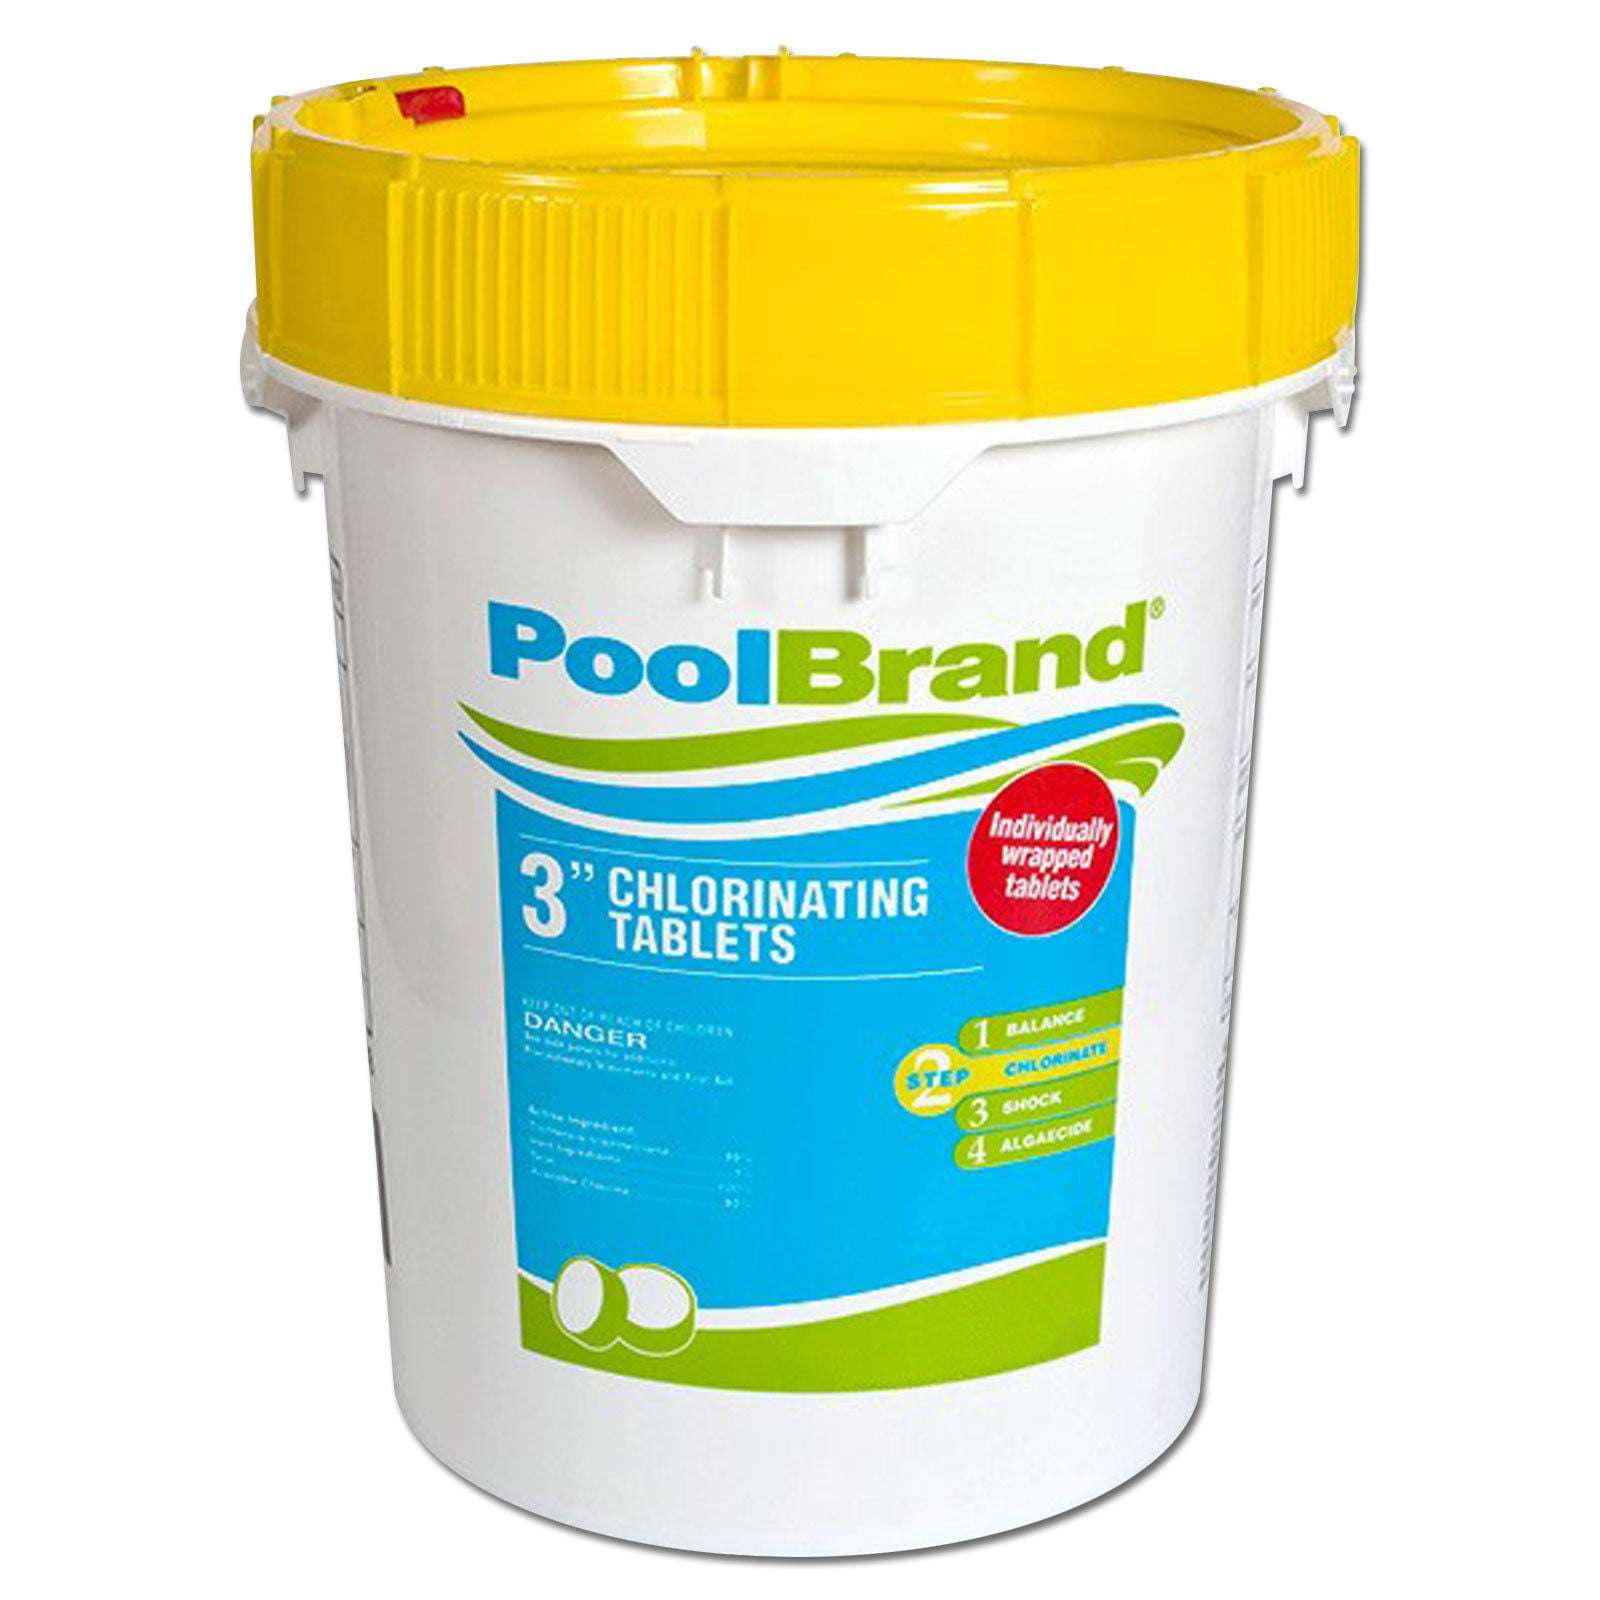 Pool Brand 3